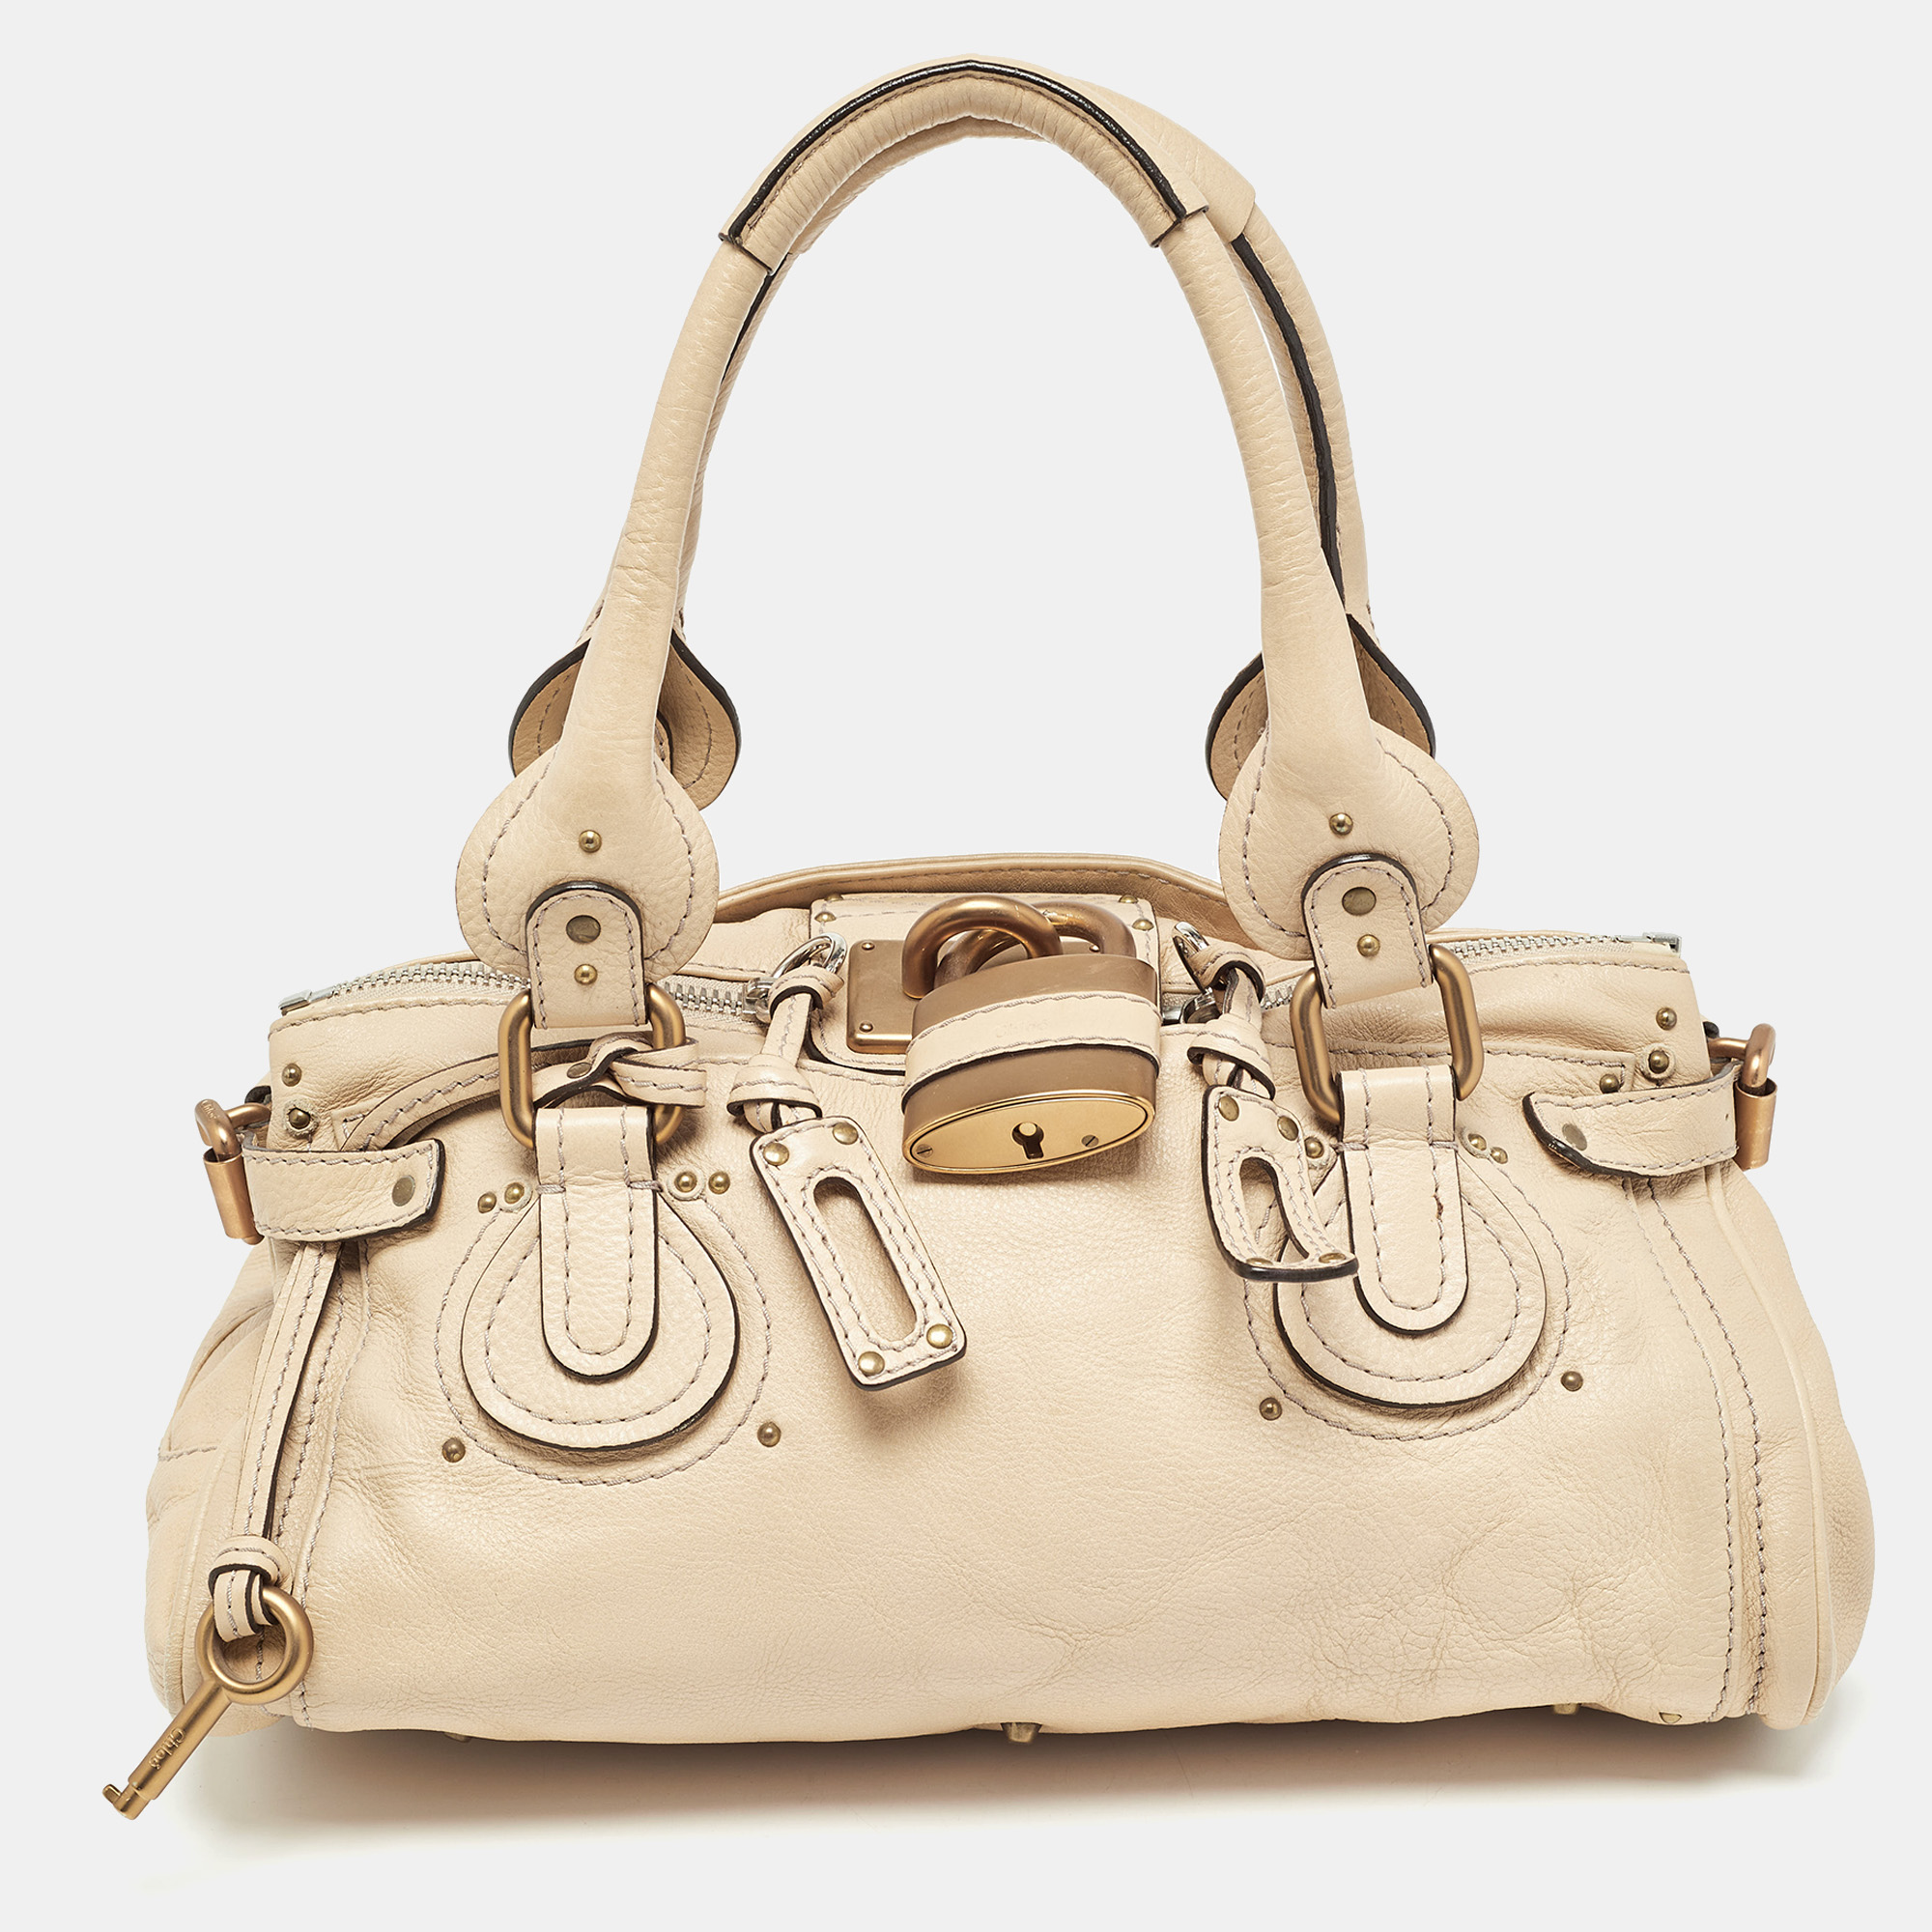 Chloe beige leather medium paddington satchel